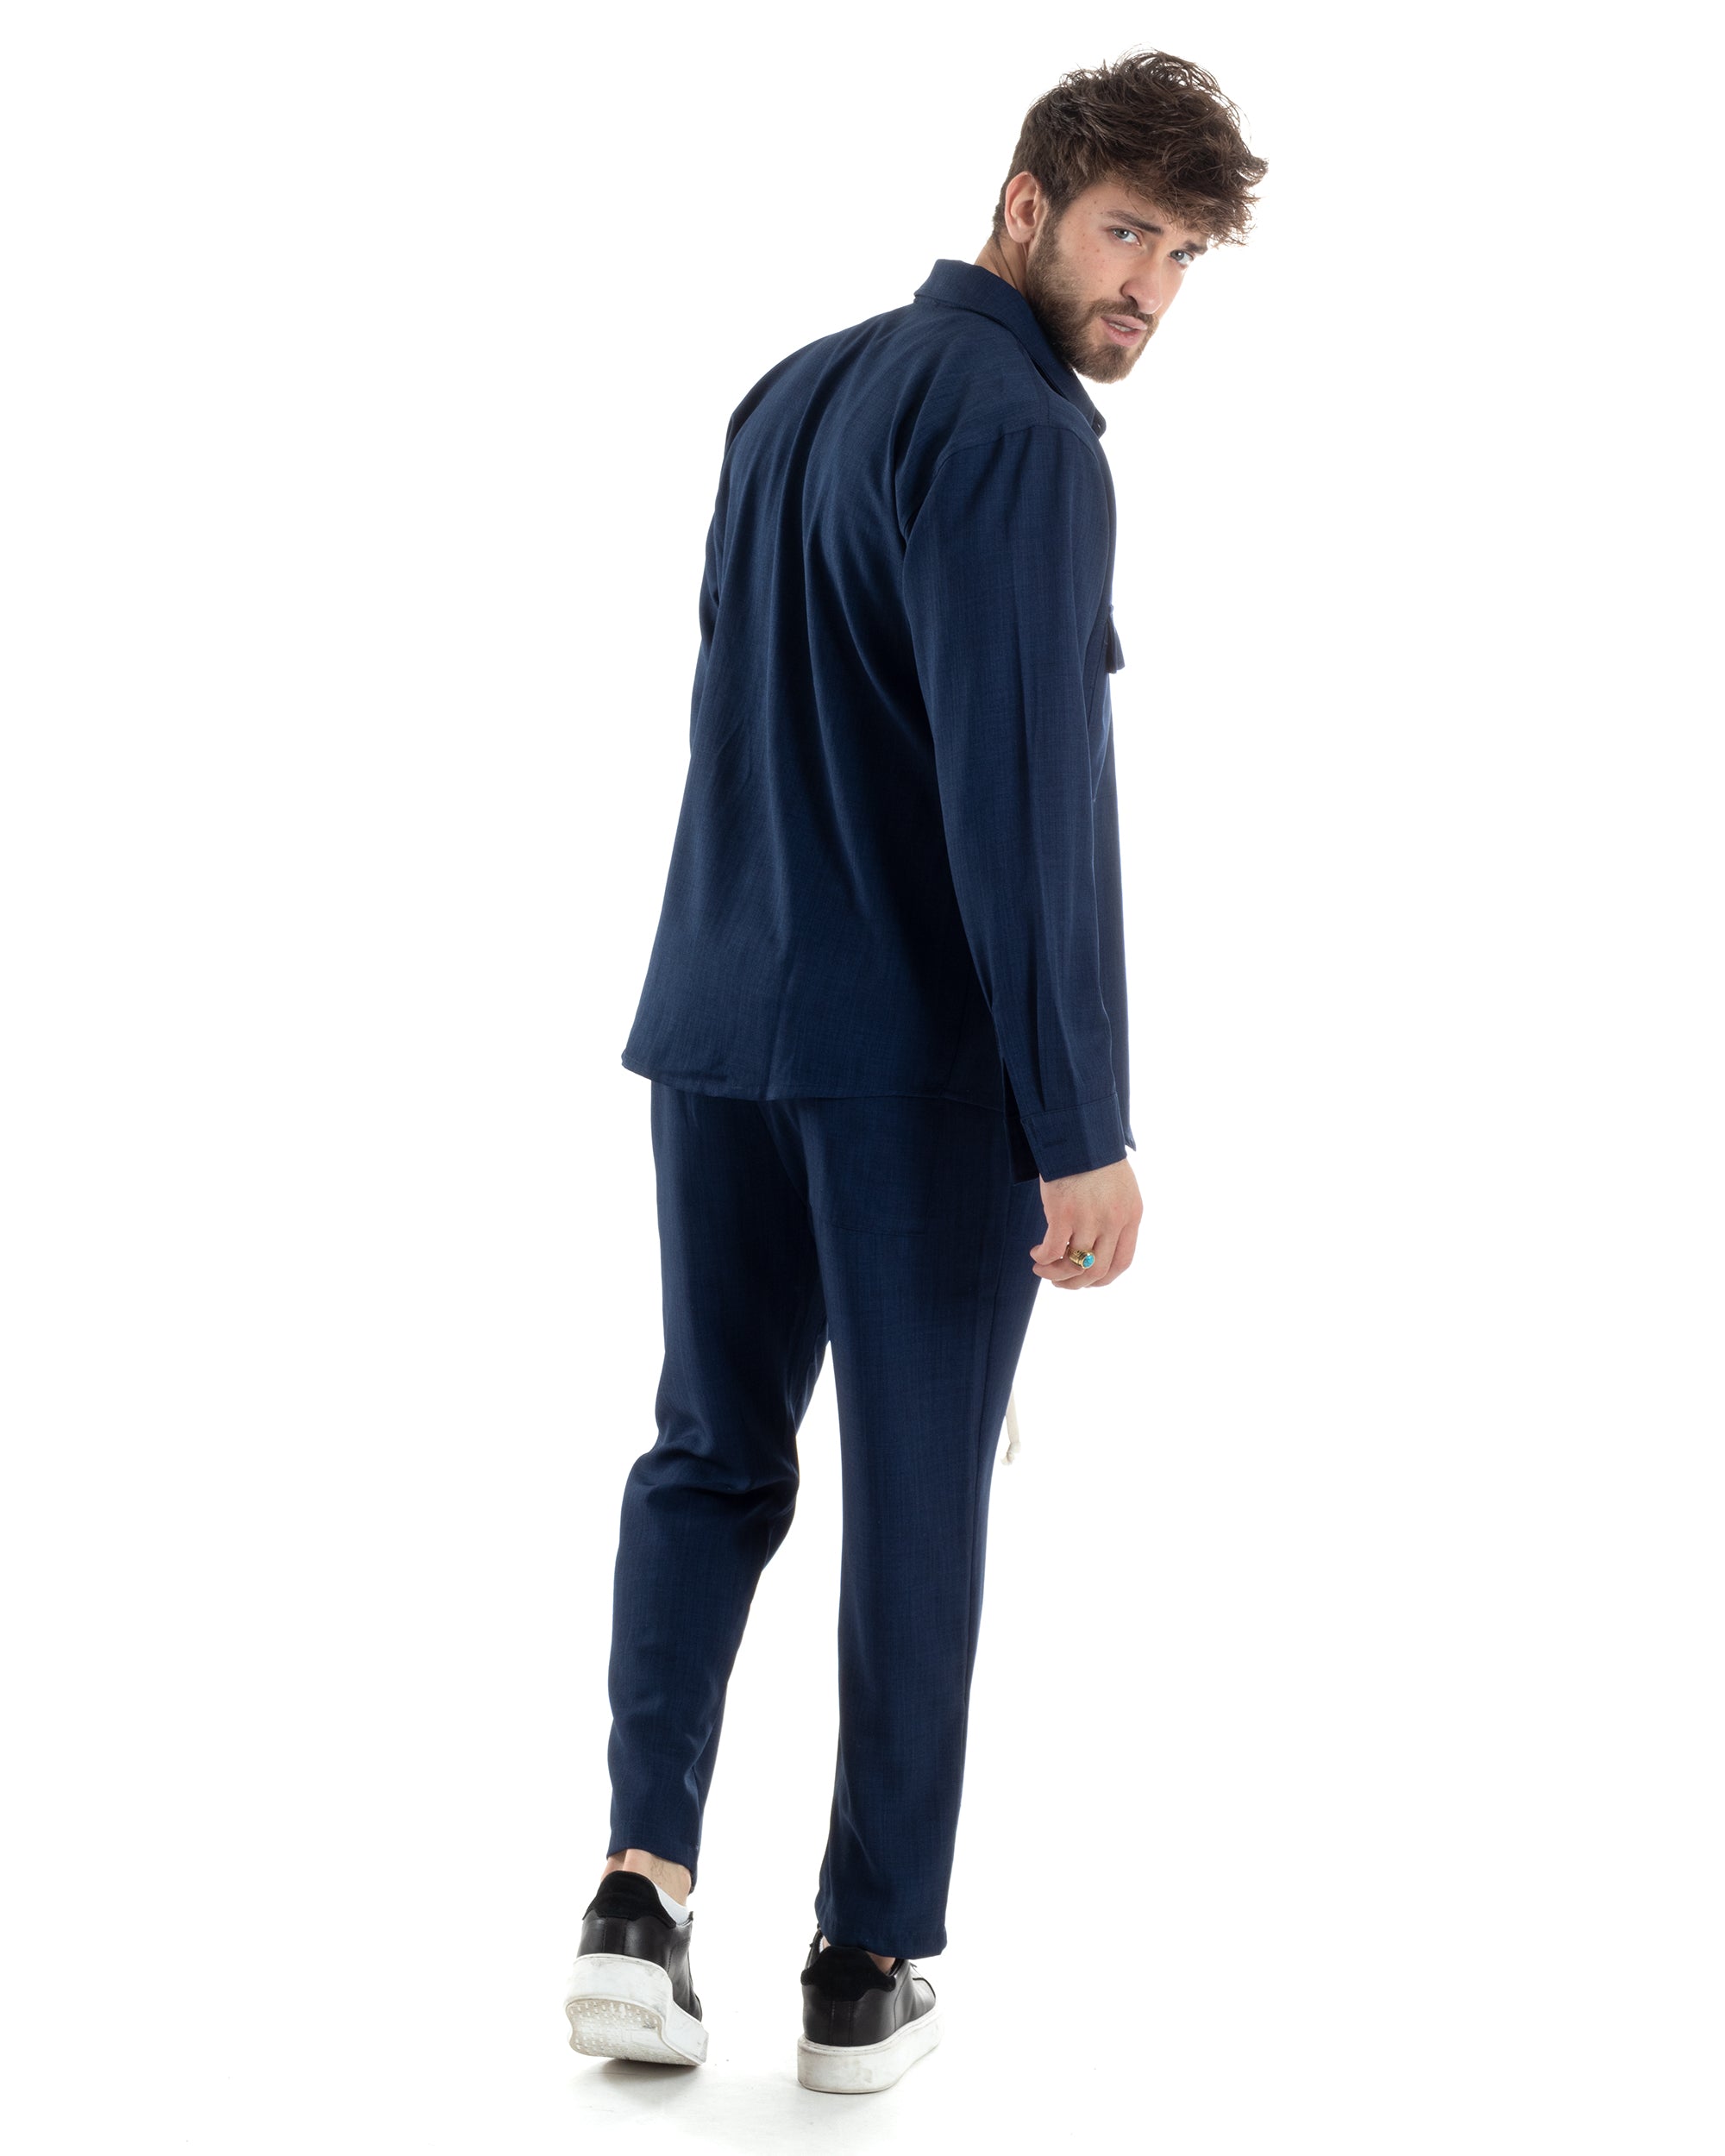 Completo Set Coordinato Uomo Viscosa Camicia Pantaloni Jogger Outfit Melangiato Blu GIOSAL-OU2451A